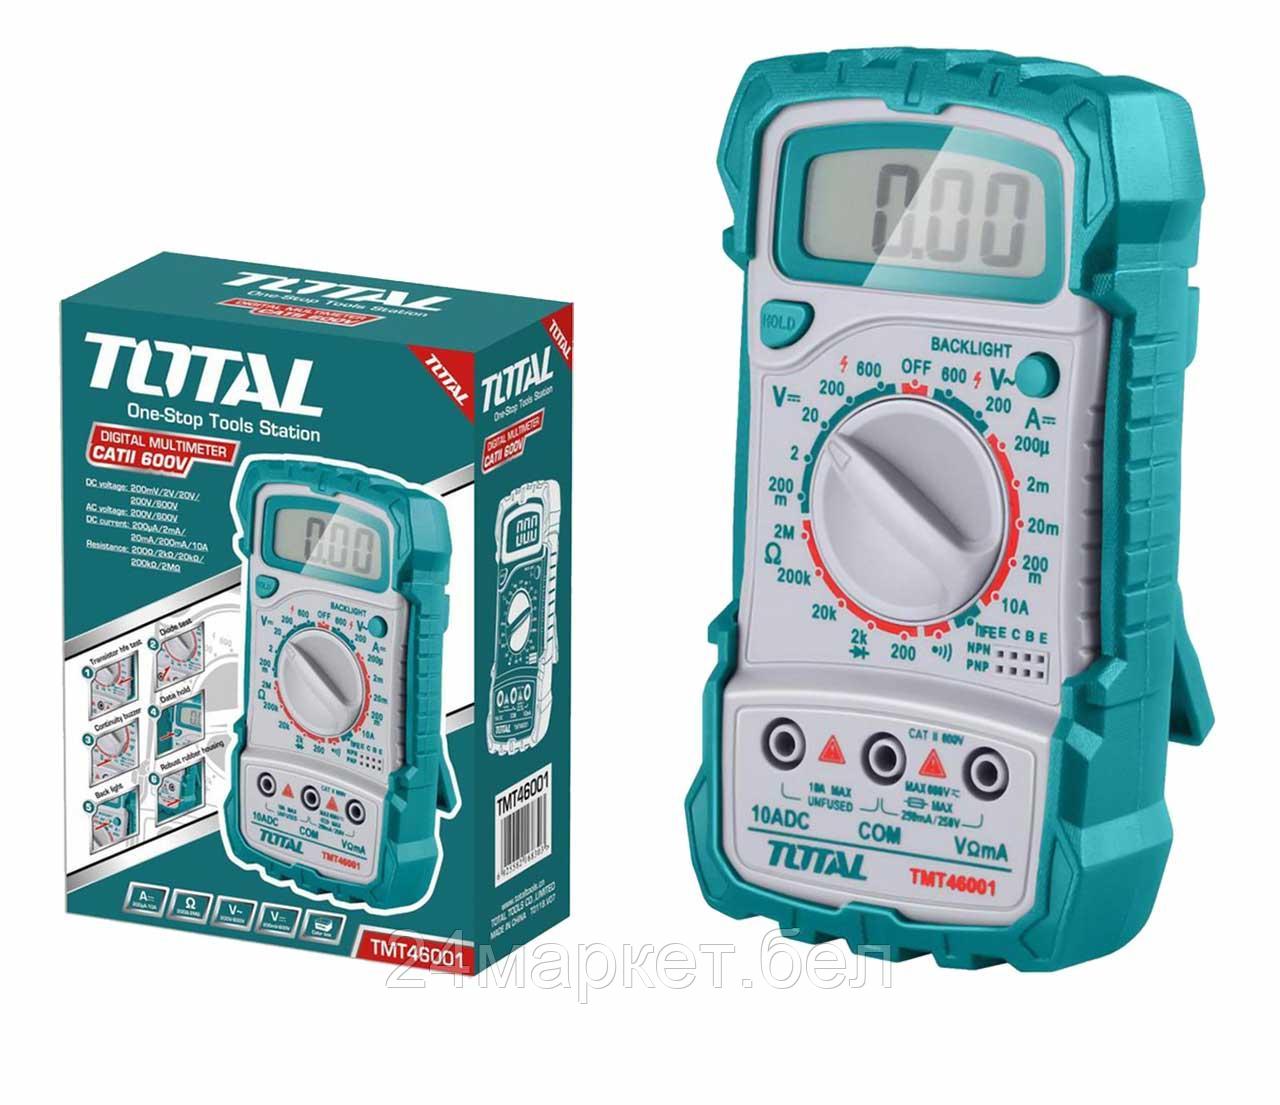 Мультиметр Total TMT46001